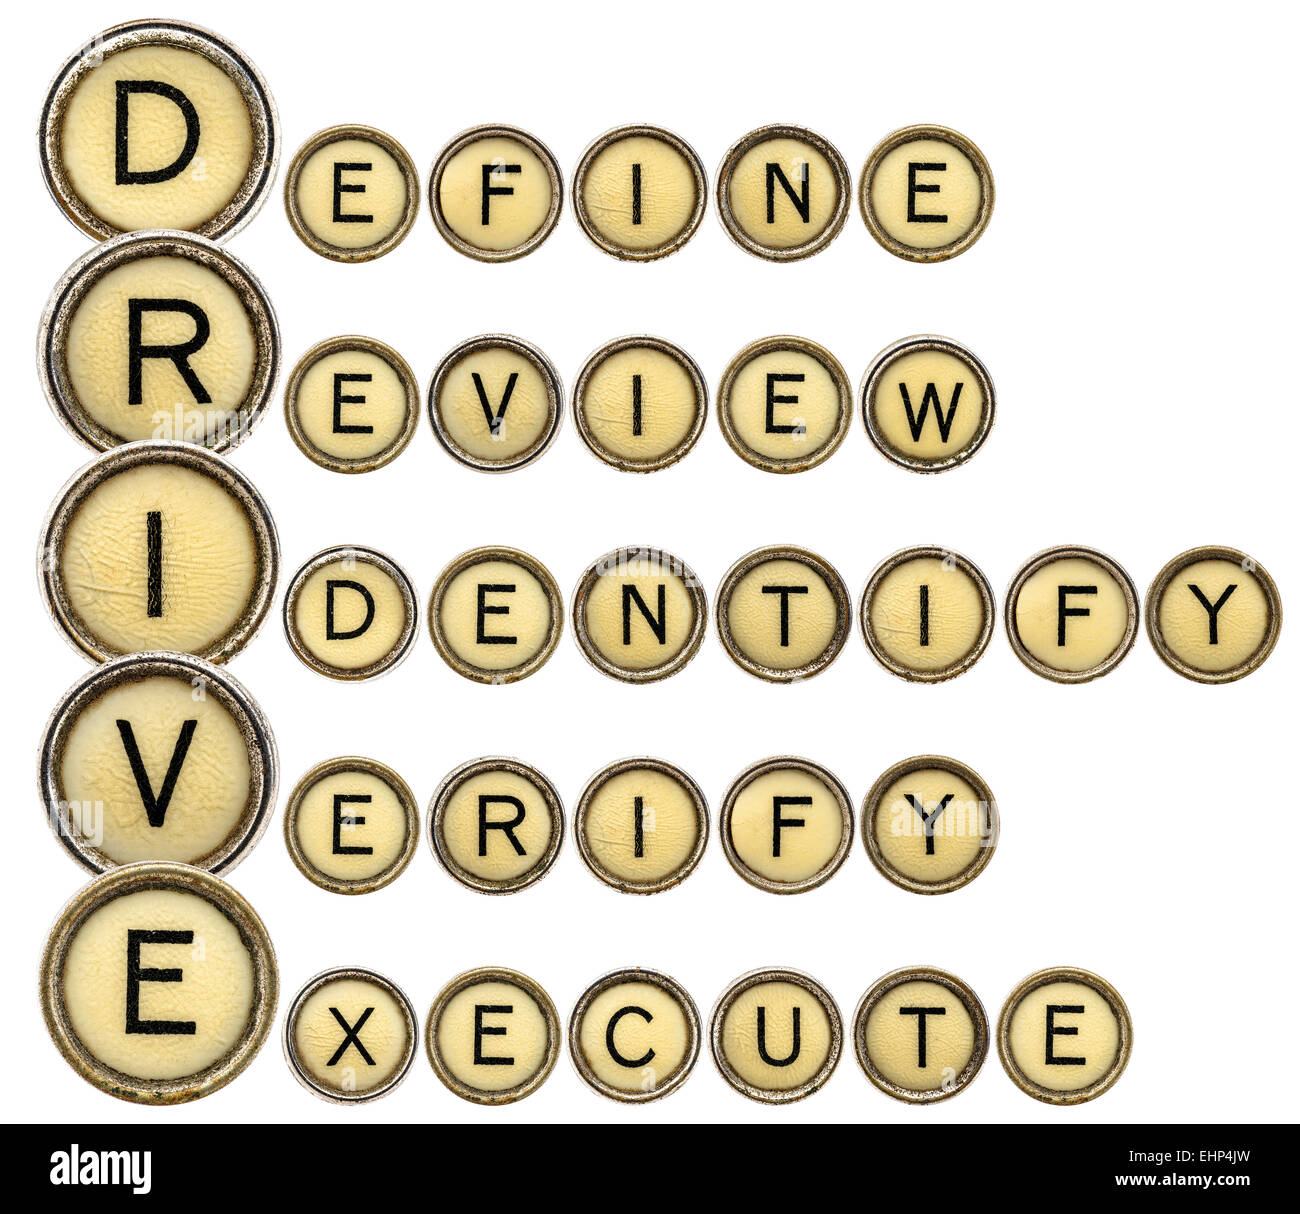 Define, Review, Identify, Verify, Execute - DRIVE quality control acronym in vintage typewriter keys Stock Photo